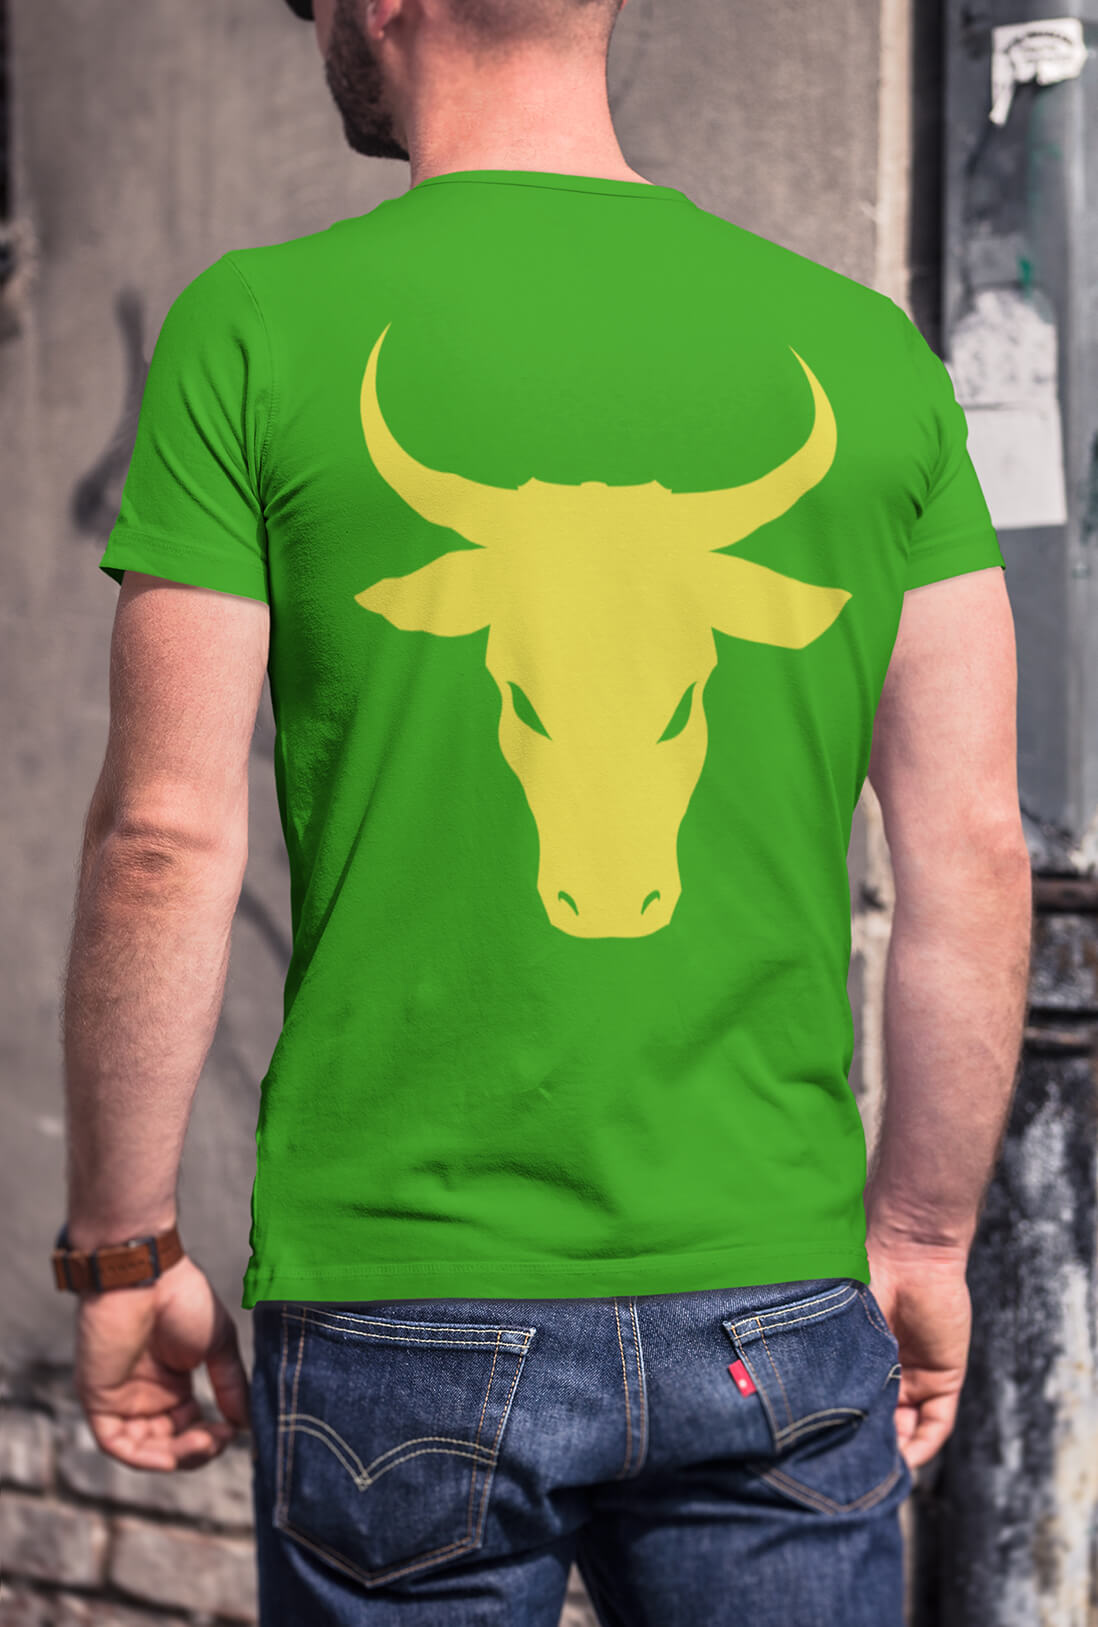 Bull Men's Back Printed T-Shirt